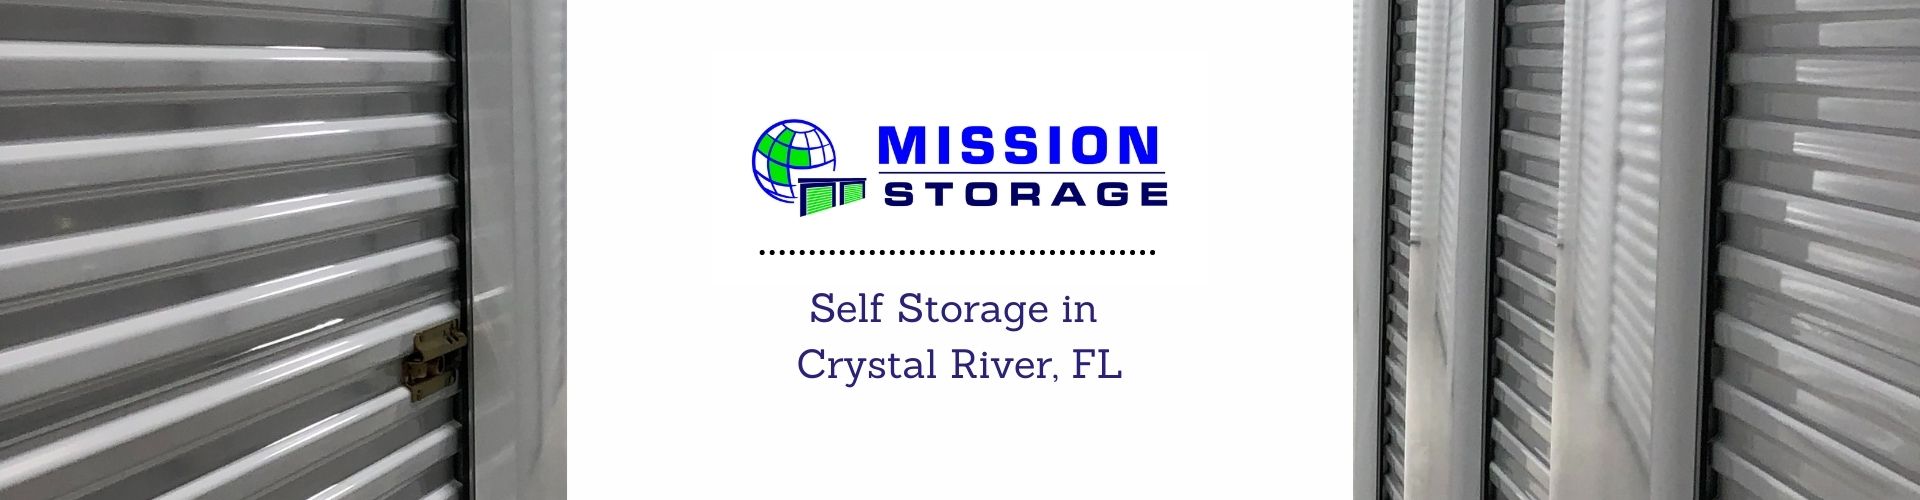 Mission Storage in Crystal River FL